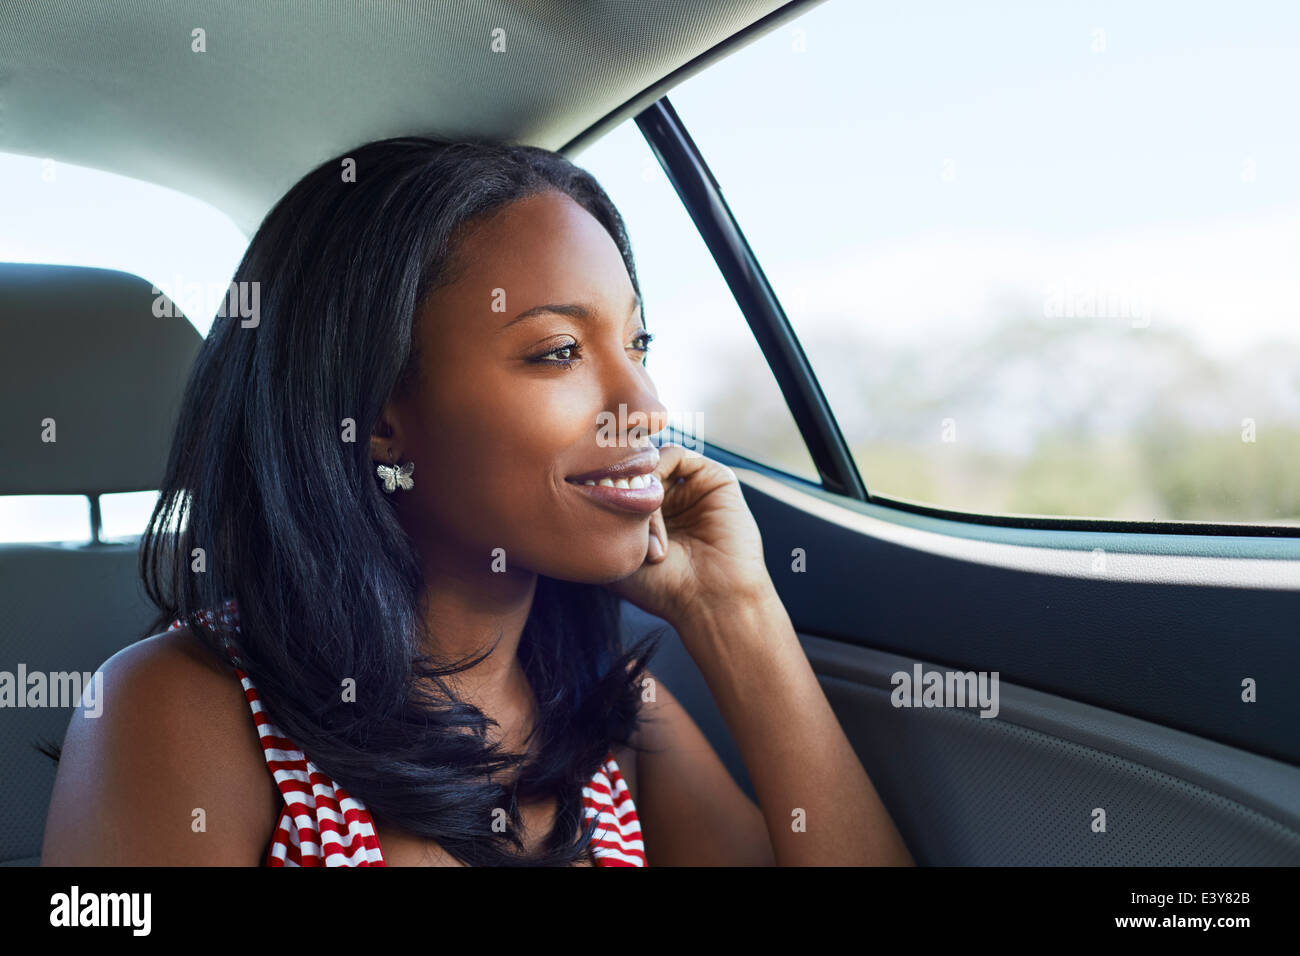 Portrait of young woman gazing through car backseat window Stock Photo